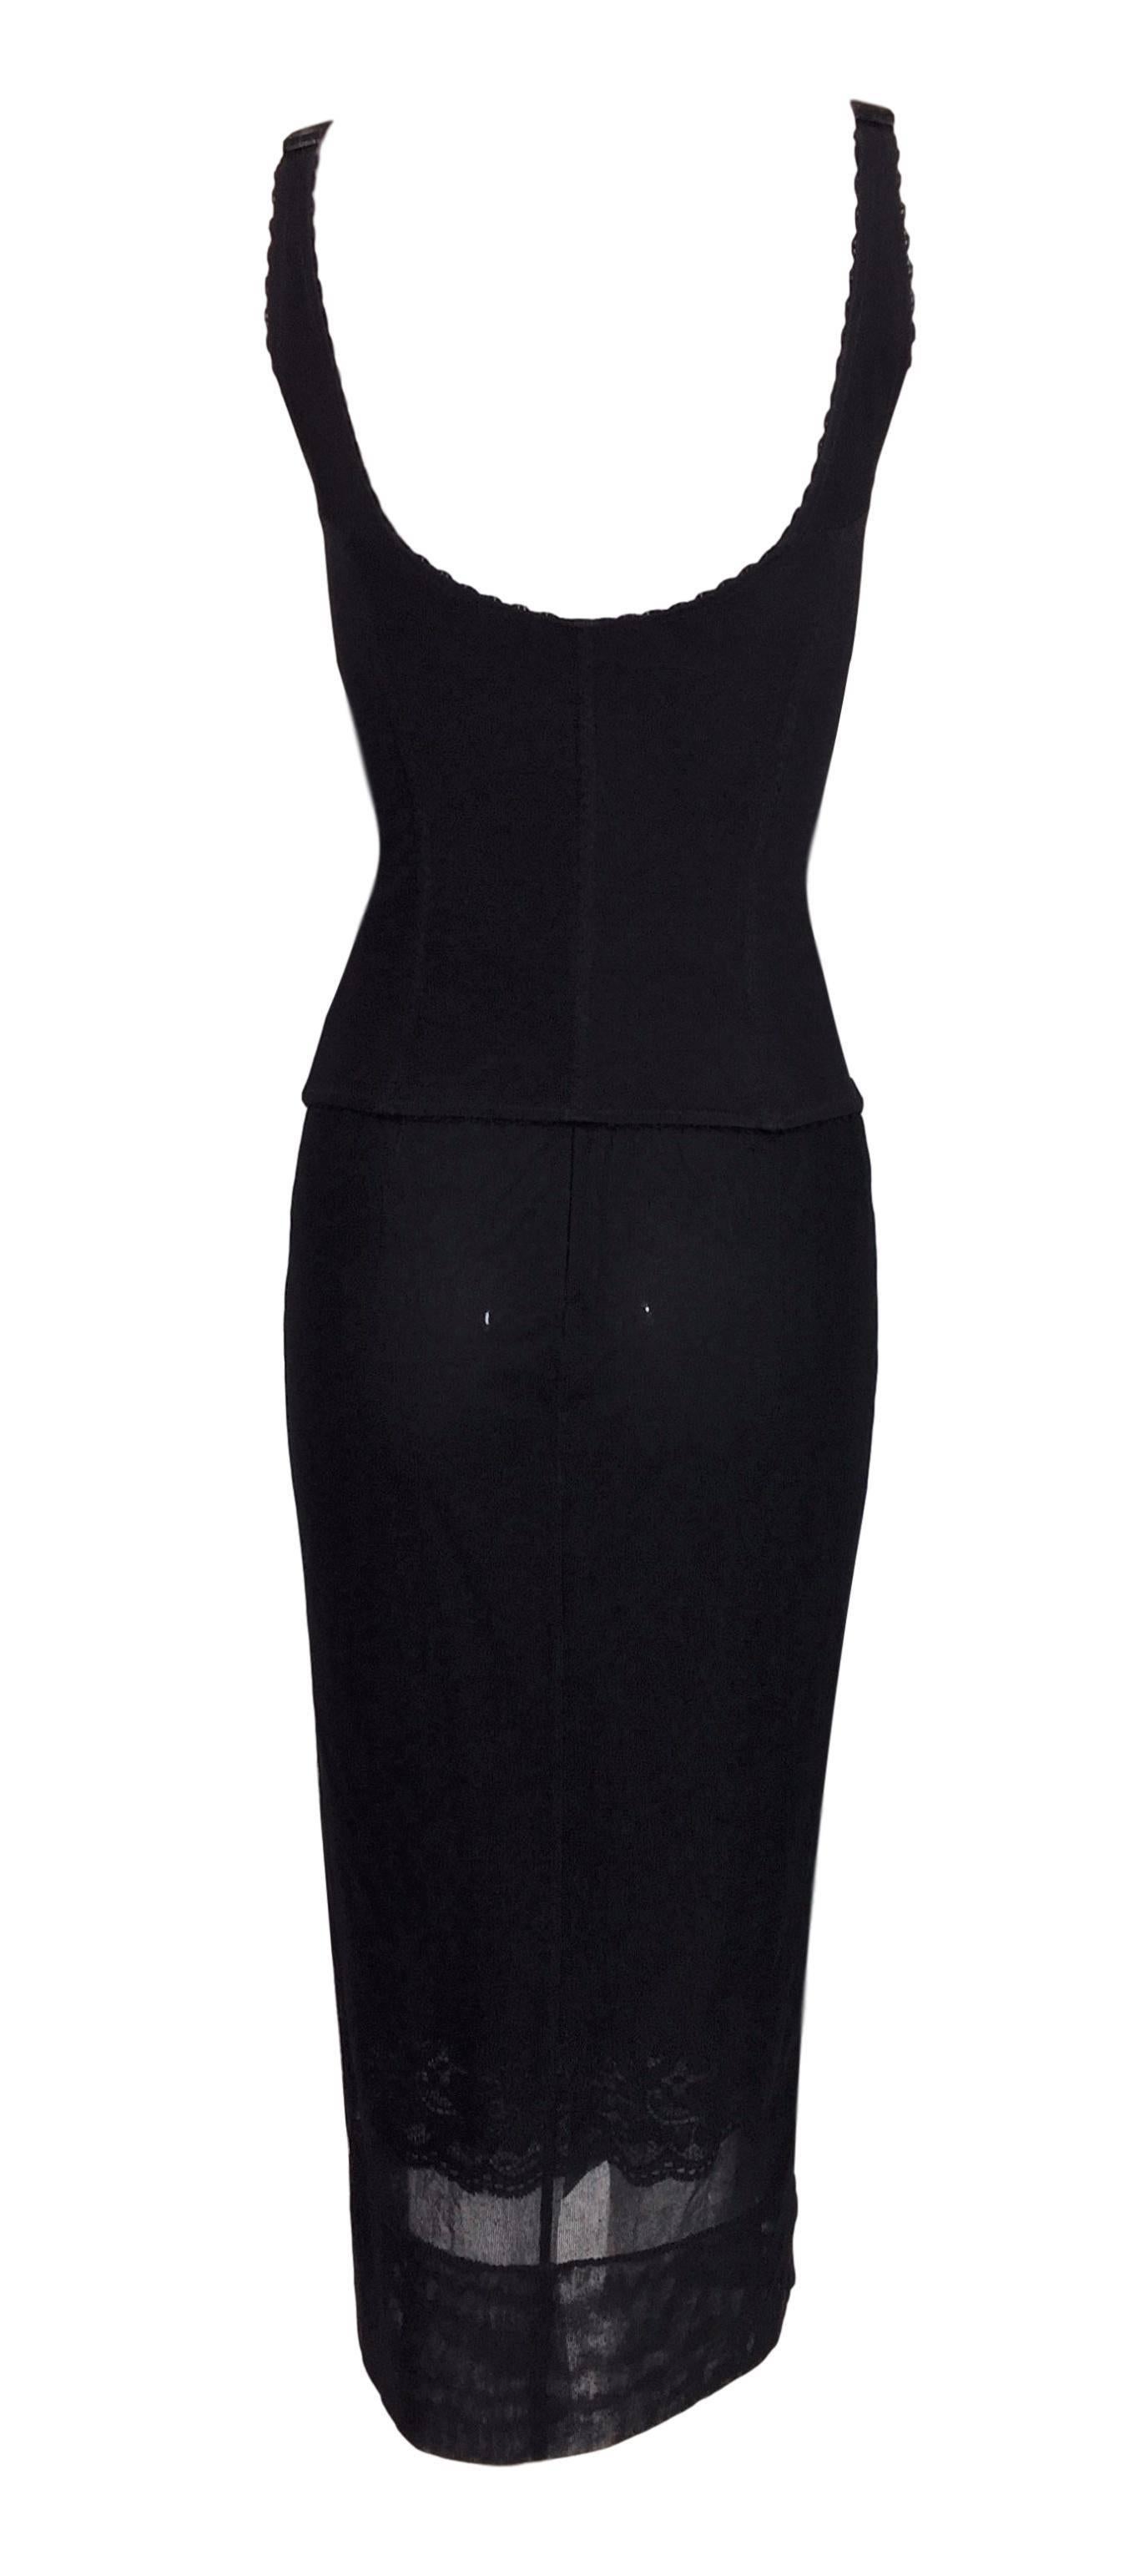 Black S/S 1998 Dolce & Gabbana Zip Front Bustier Top and Sheer Mesh Skirt Set